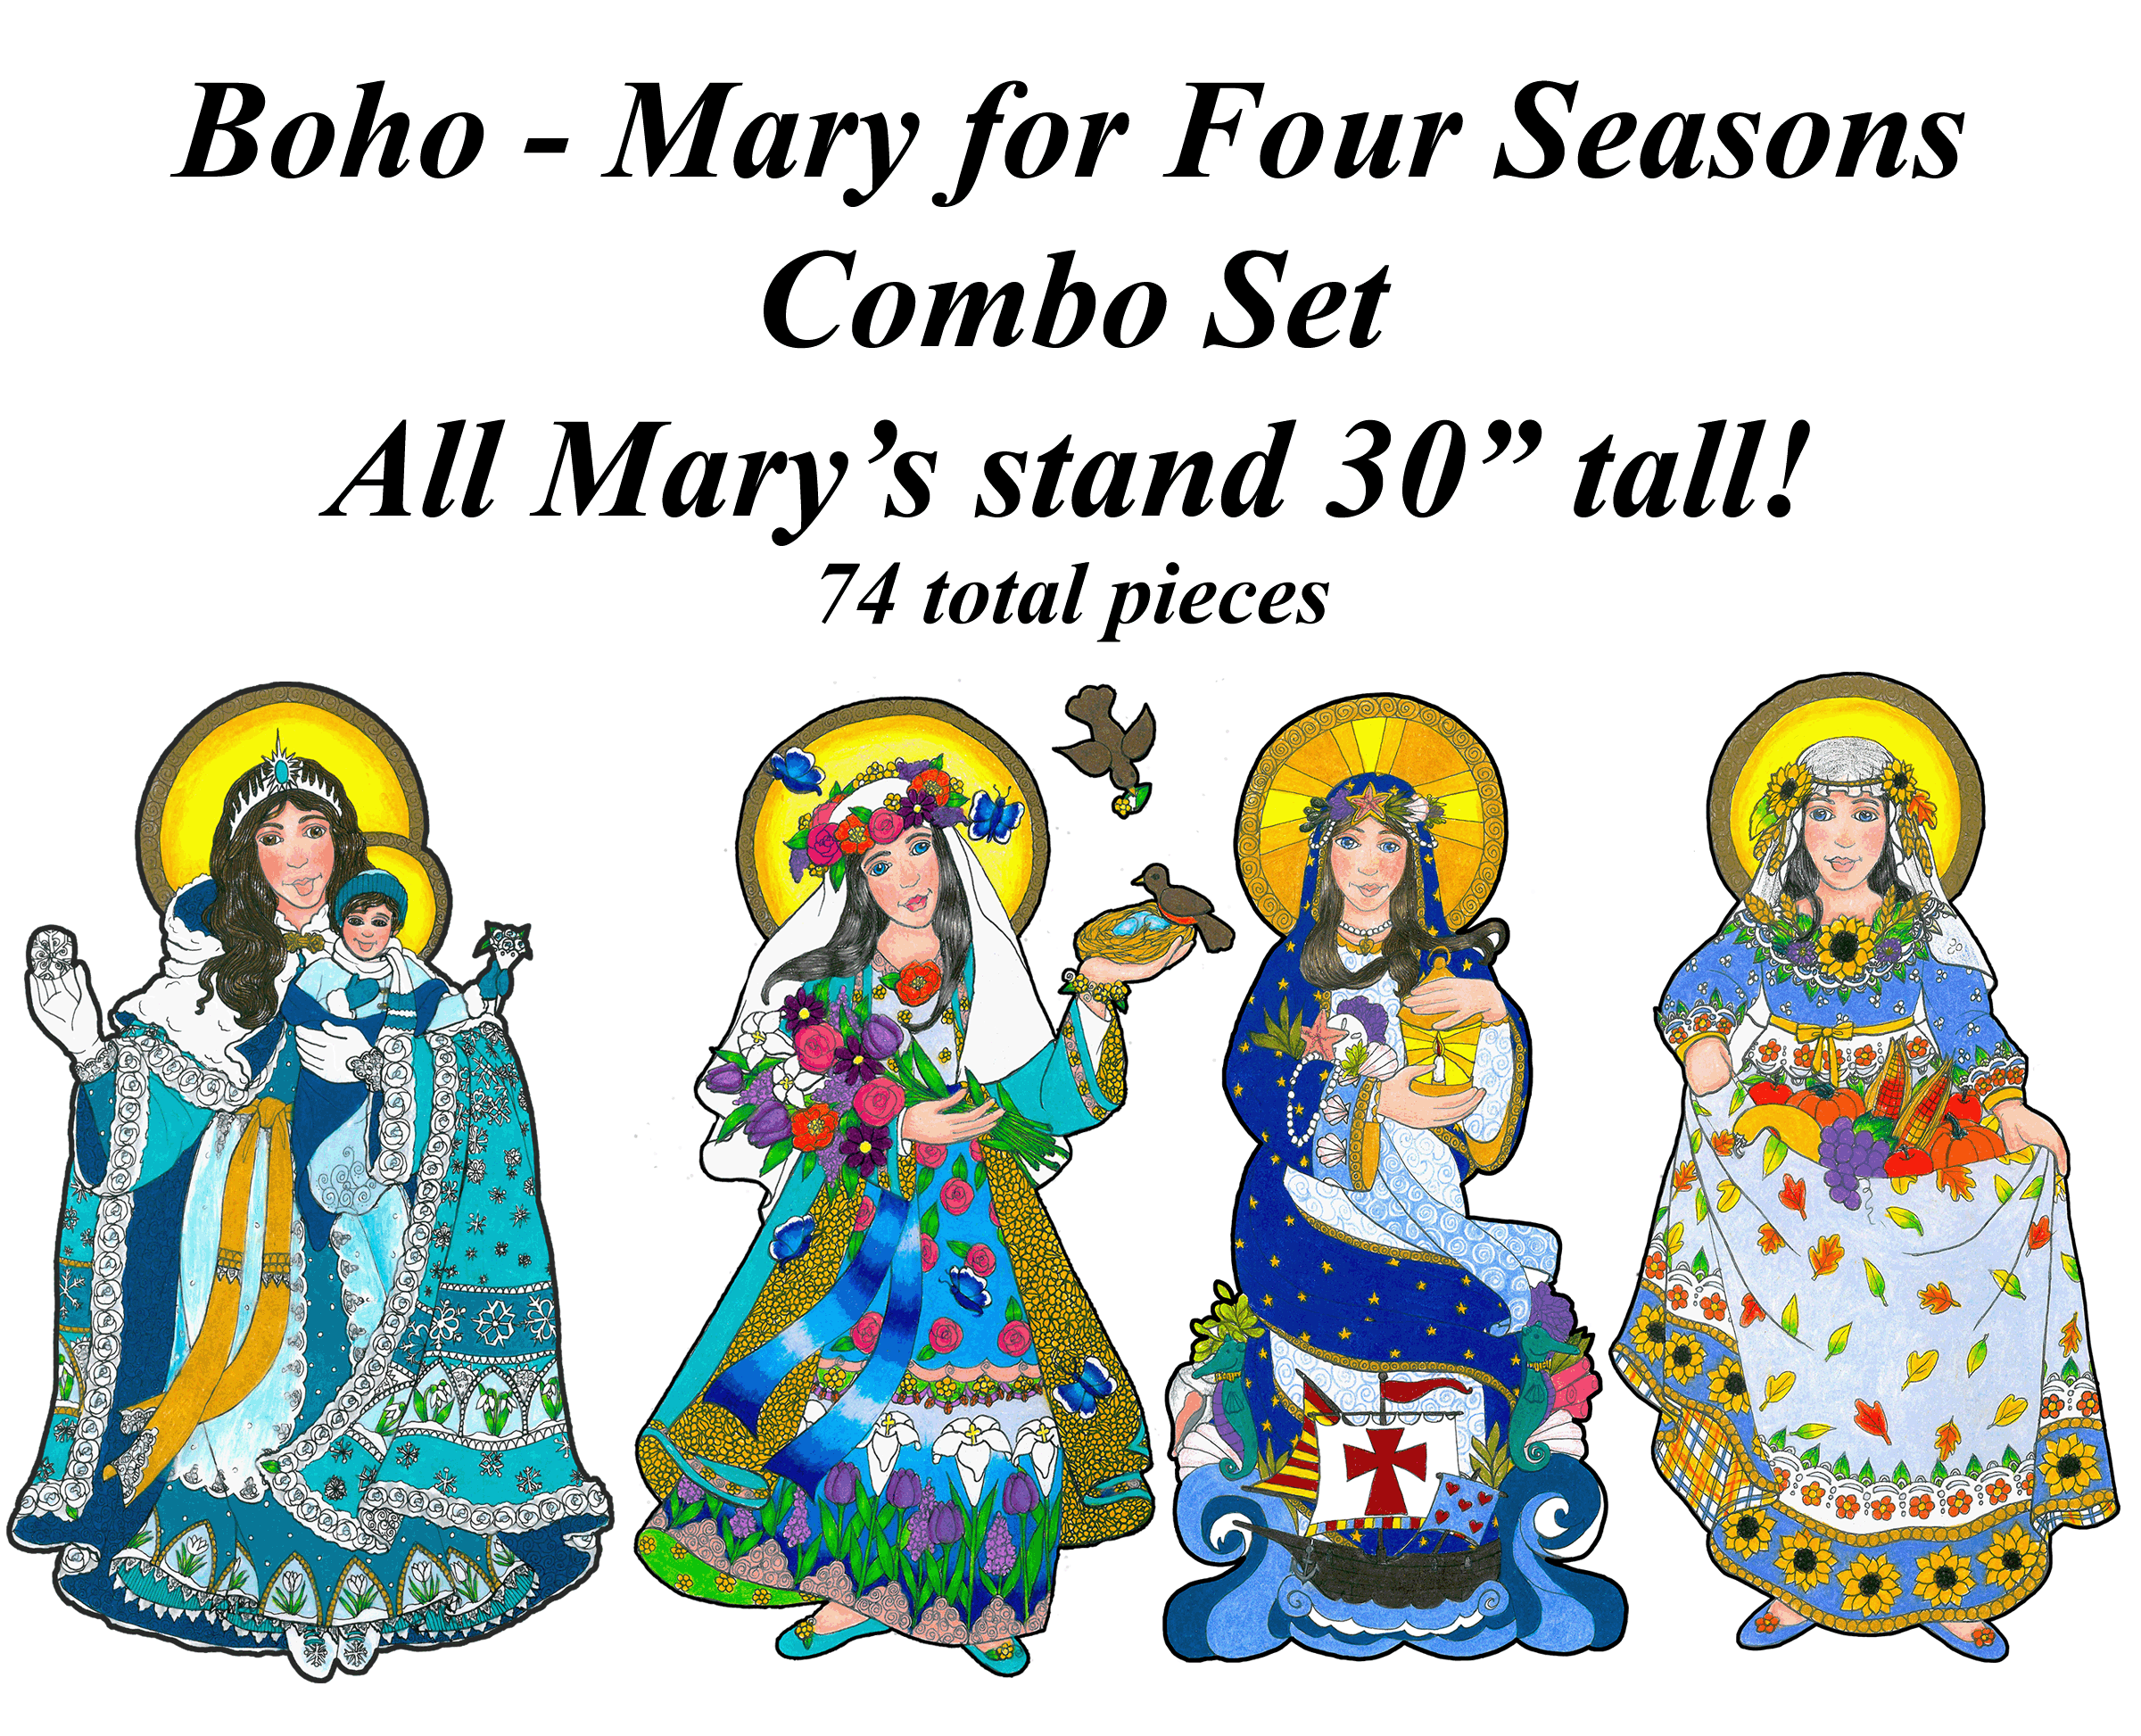 Boho Mary for Four Seasons